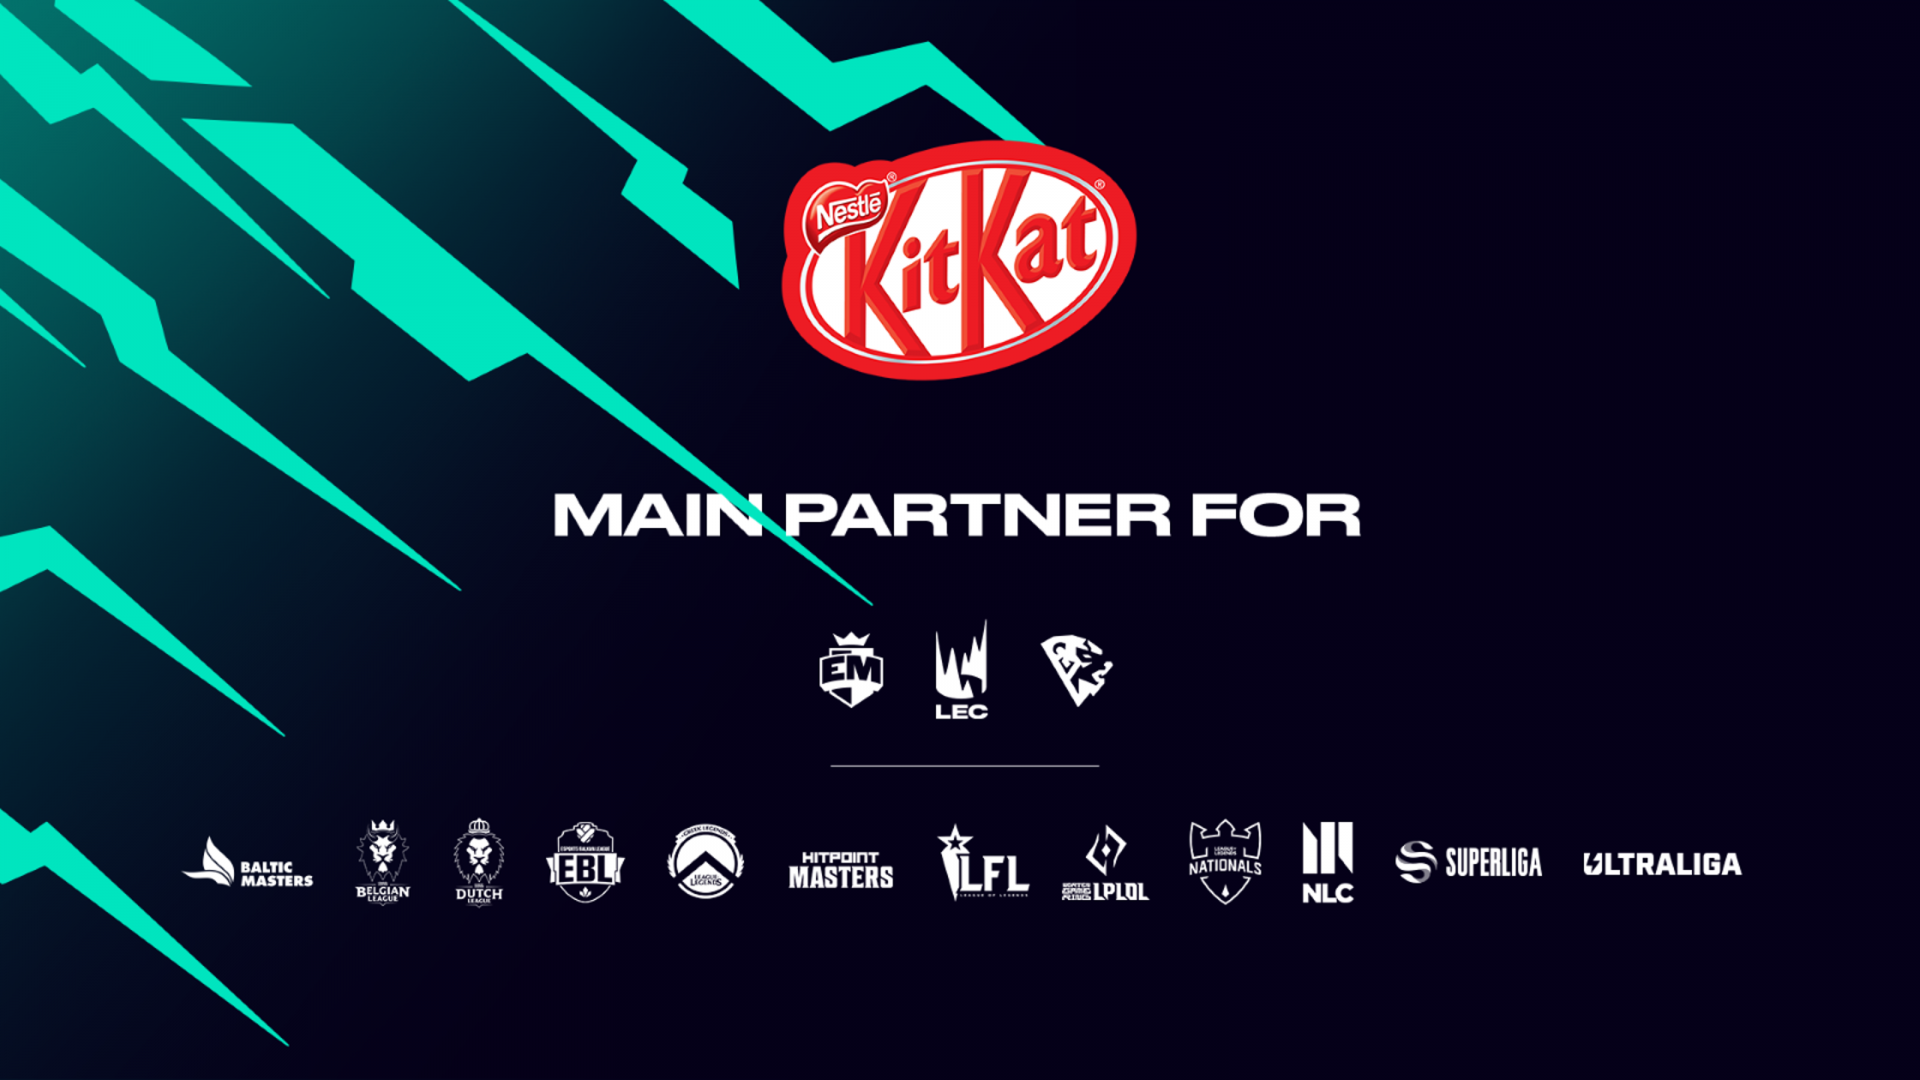 Riot Games, LEC, EU Masters ve LCL, KitKat ile ortak oldu